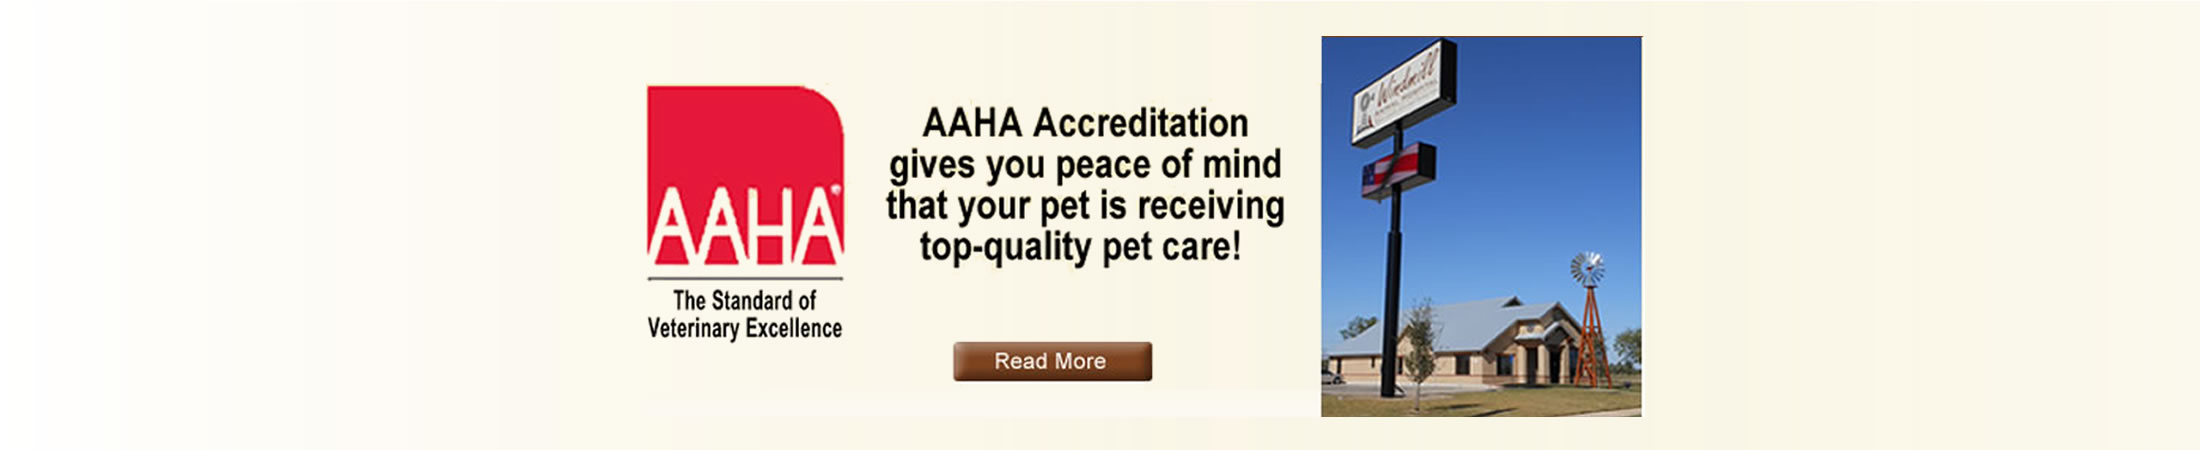 Windmill Animal Hospital is AAHA accredited